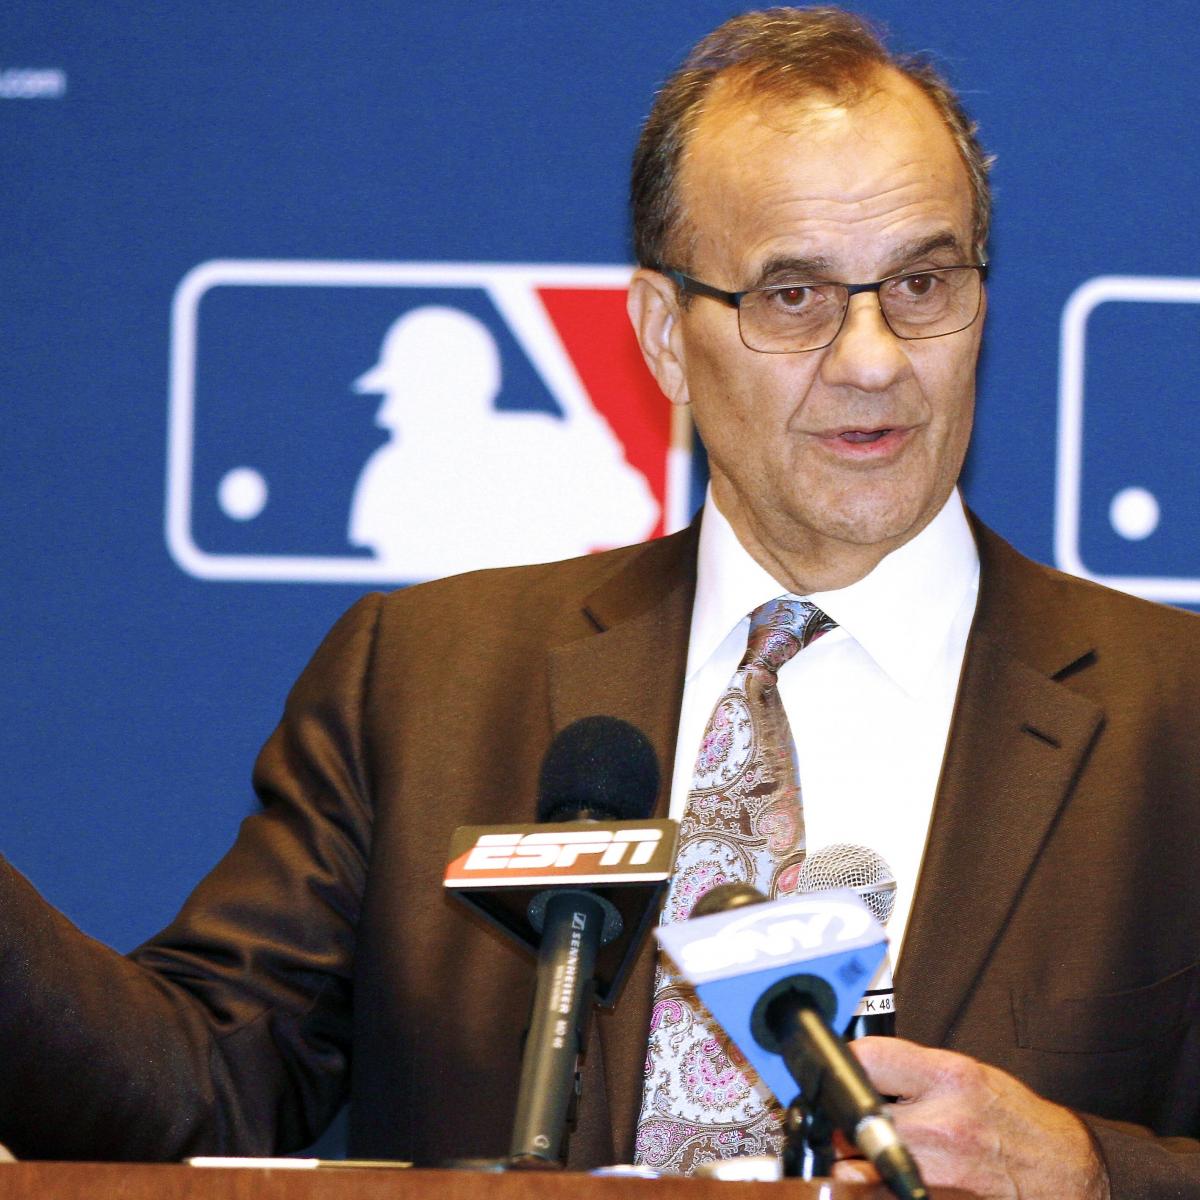 Speaker: Joe Torre, Executive VP Of Operations For The MLB